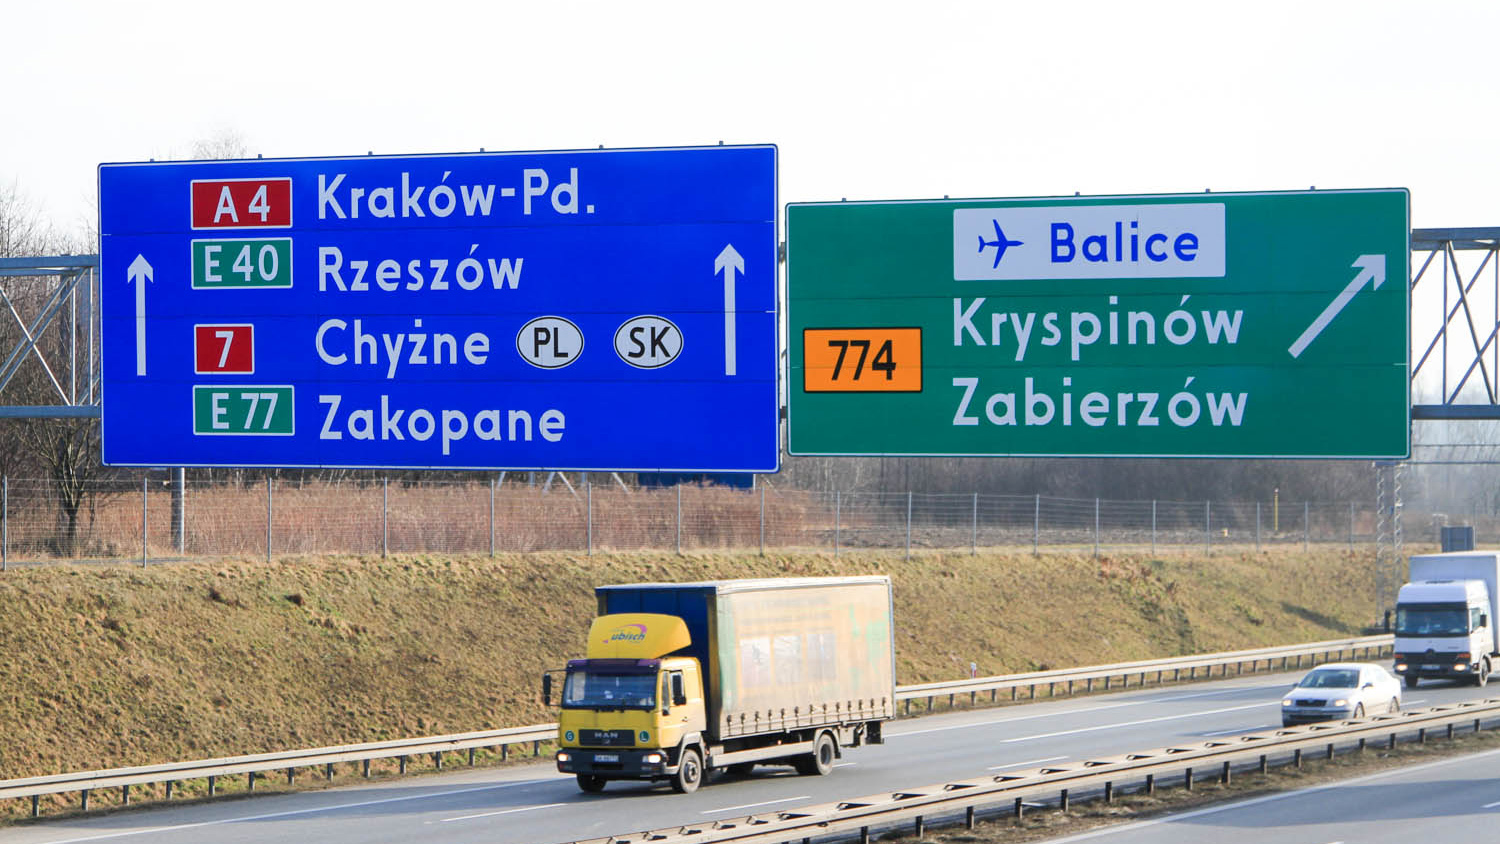 Польша. Начало ремонтных работ на автостраде А4